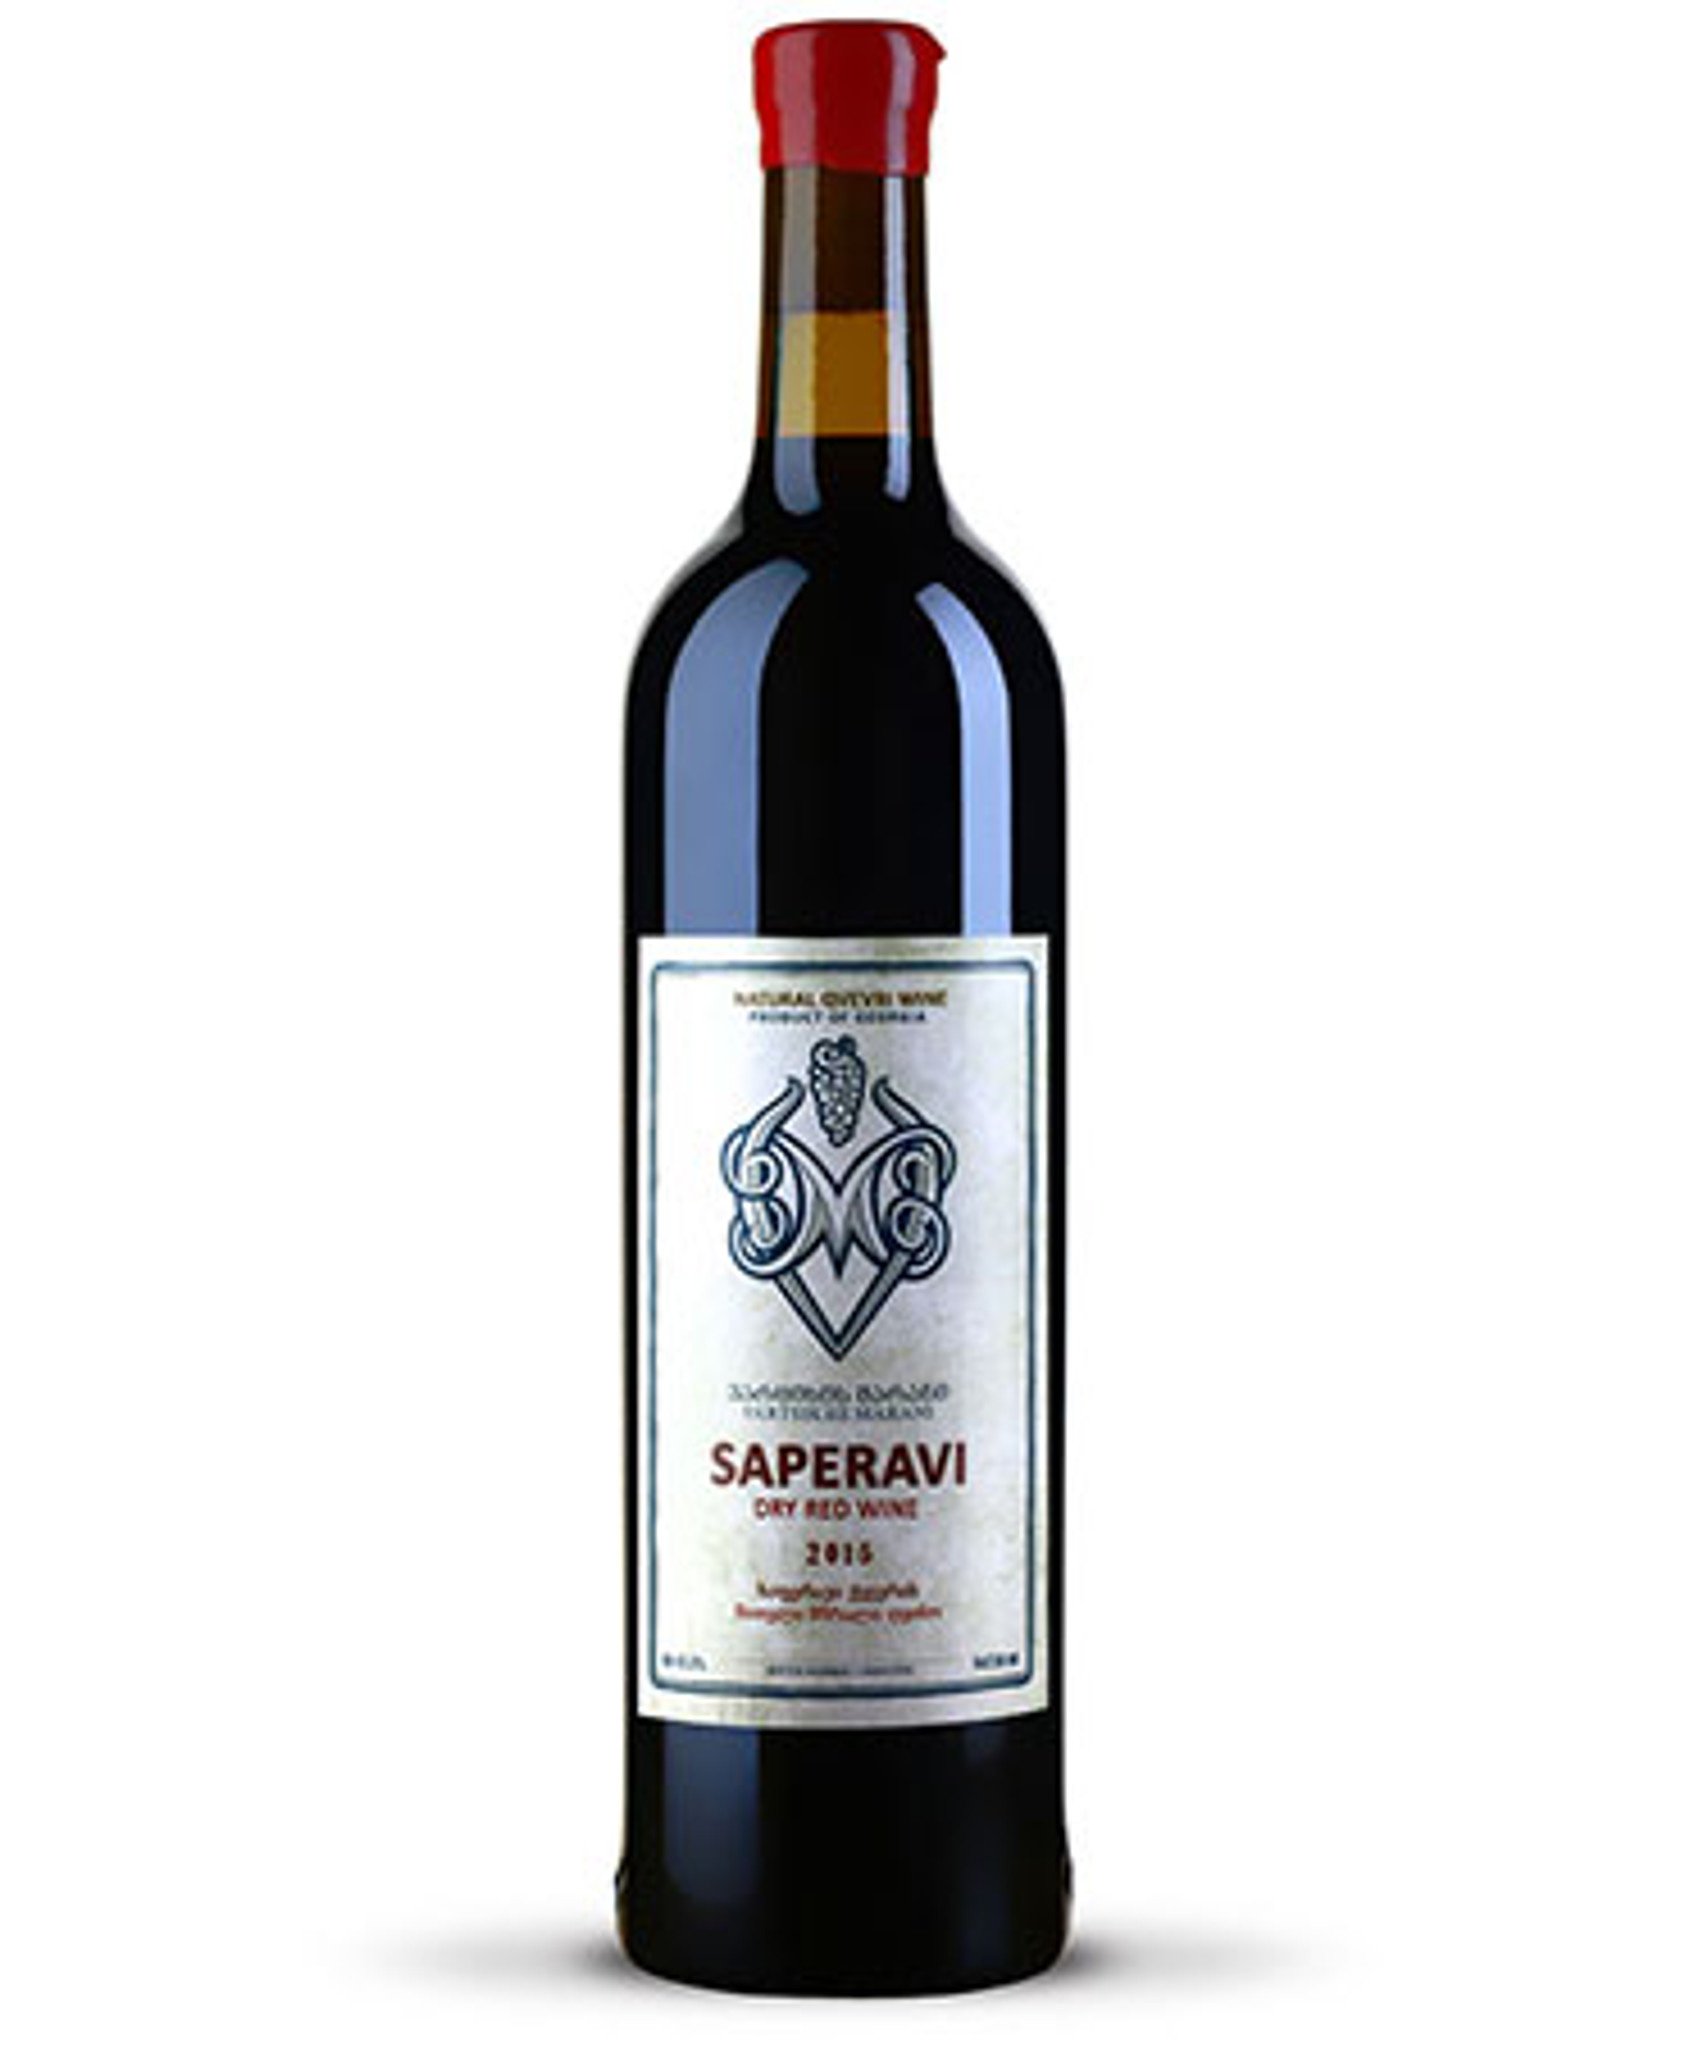 Vartsikhe Marani Saperavi Dry Red Wine Georgia 2019 750ml